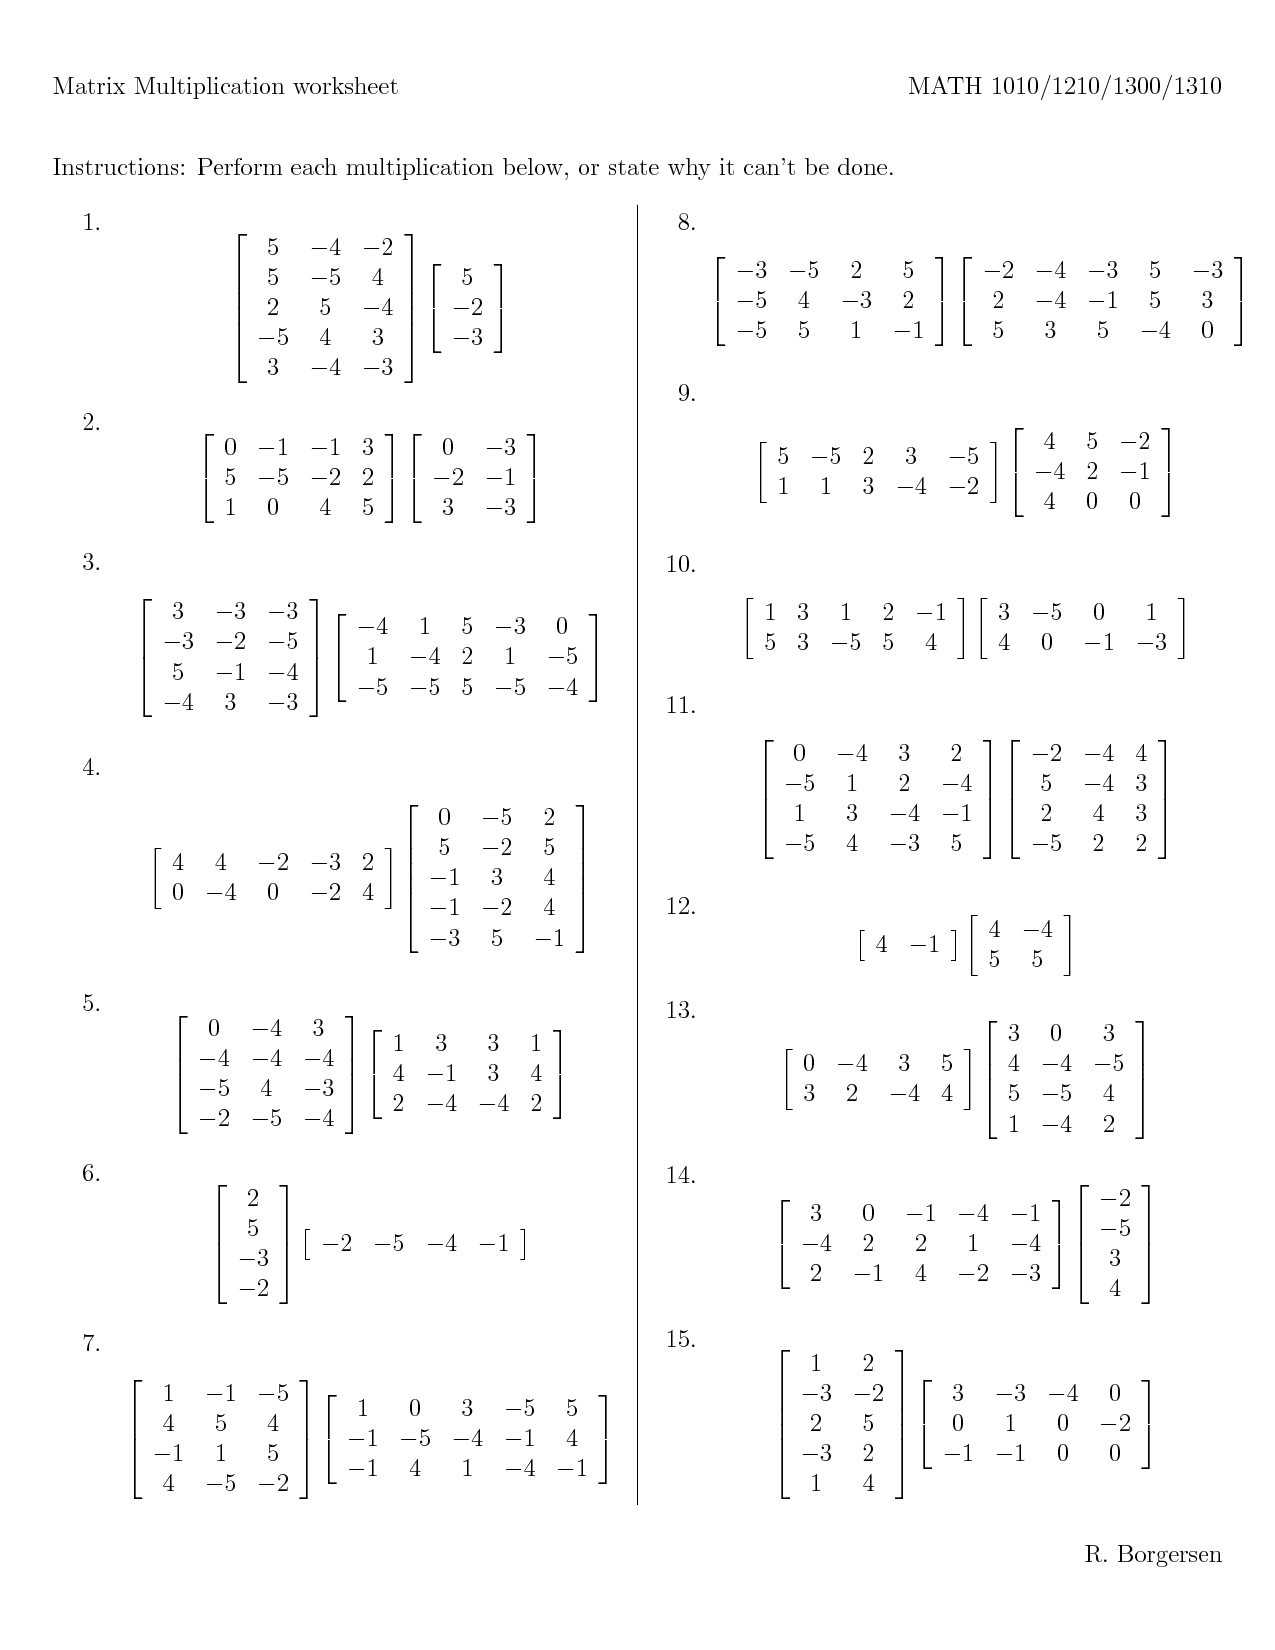 Matrix Multiplication Worksheet Find The Product